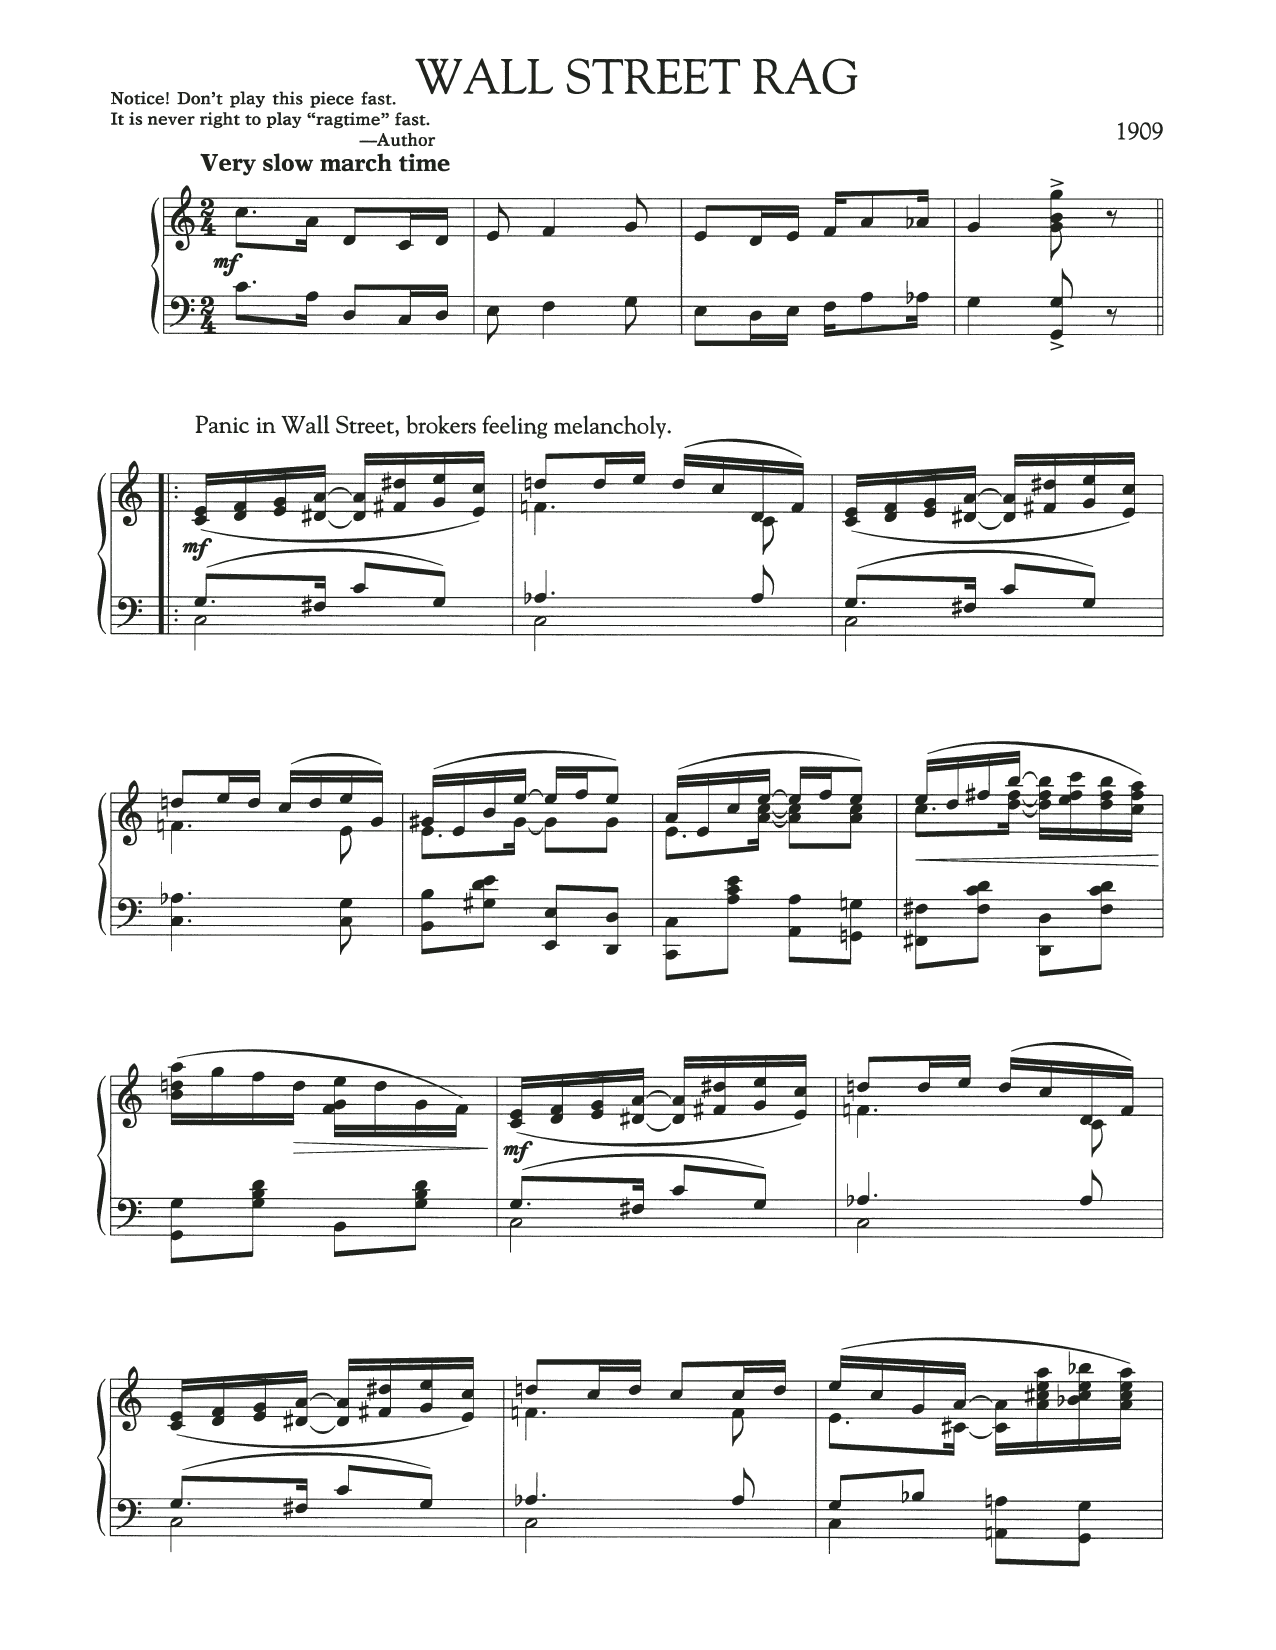 Download Scott Joplin Wall Street Rag Sheet Music and learn how to play Piano Solo PDF digital score in minutes